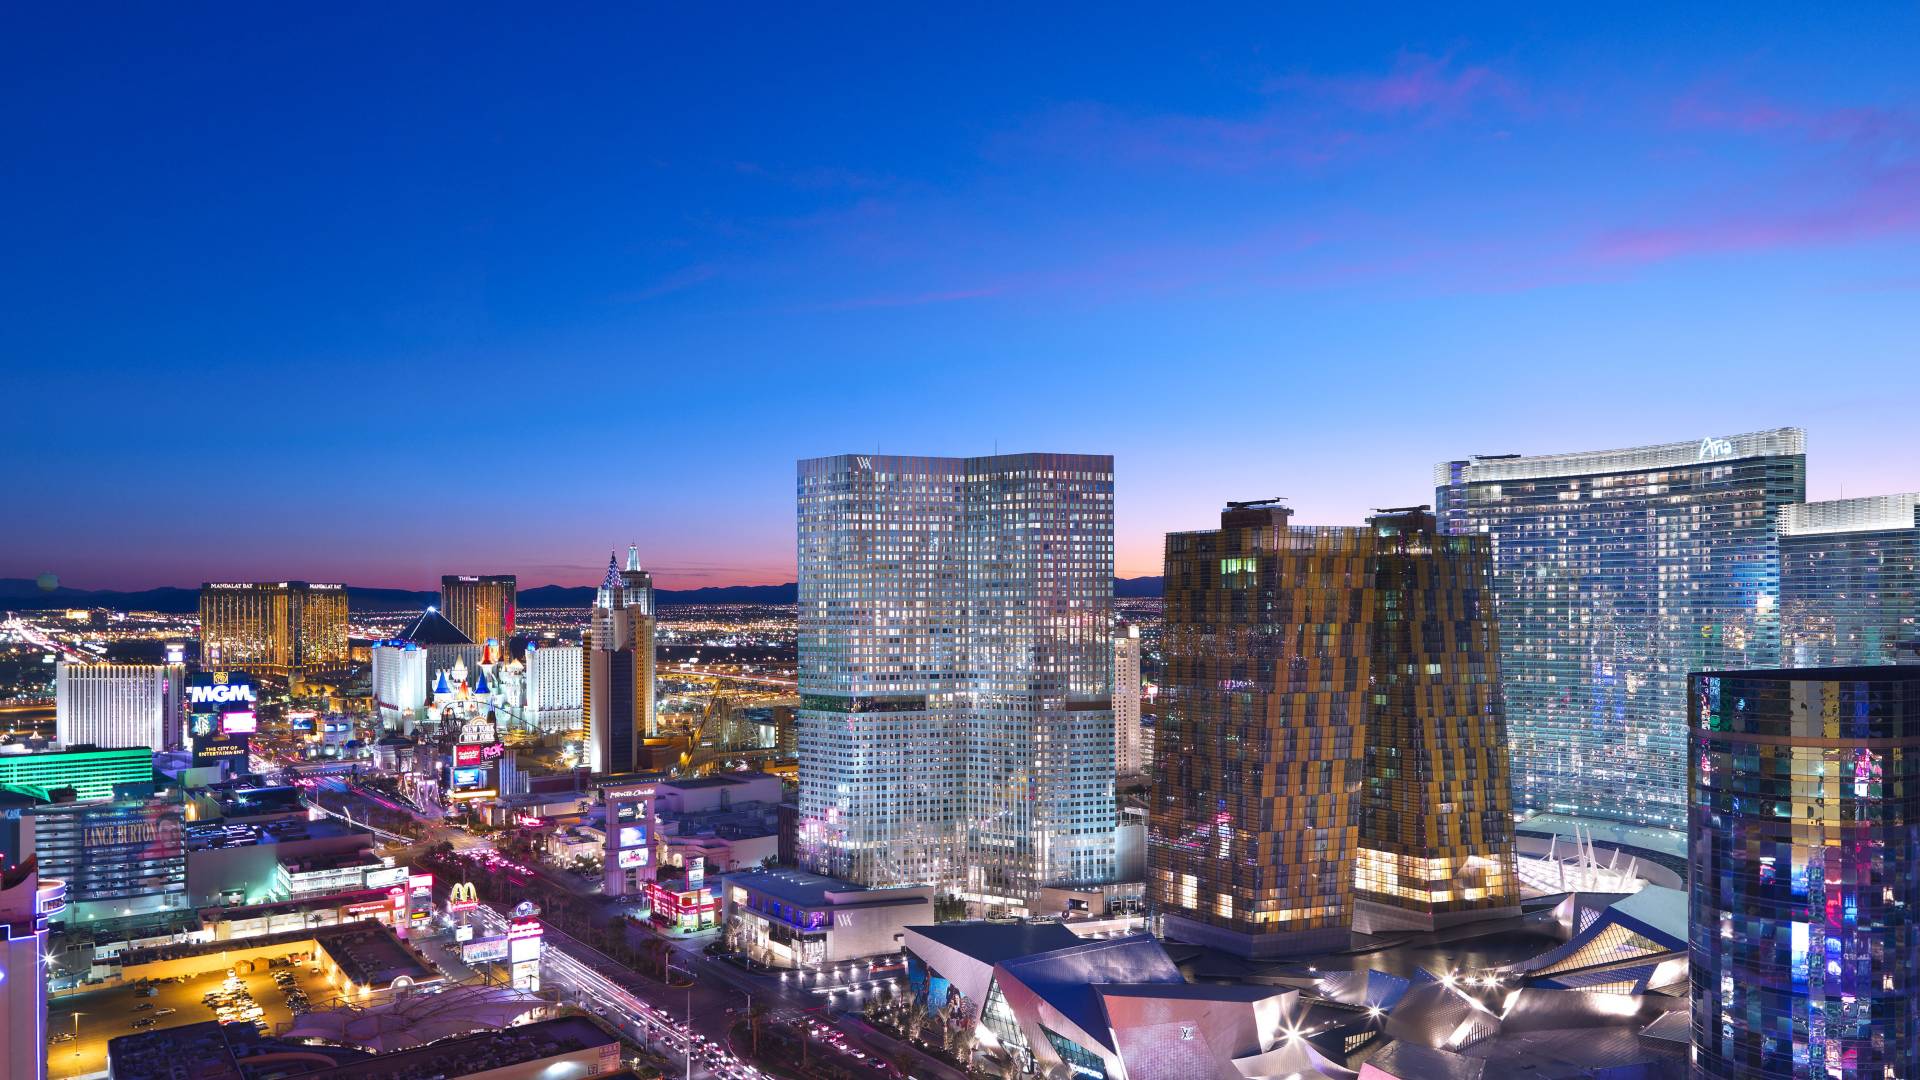 Panoramic Shot of Hotel Exterior And Las Vegas Strip